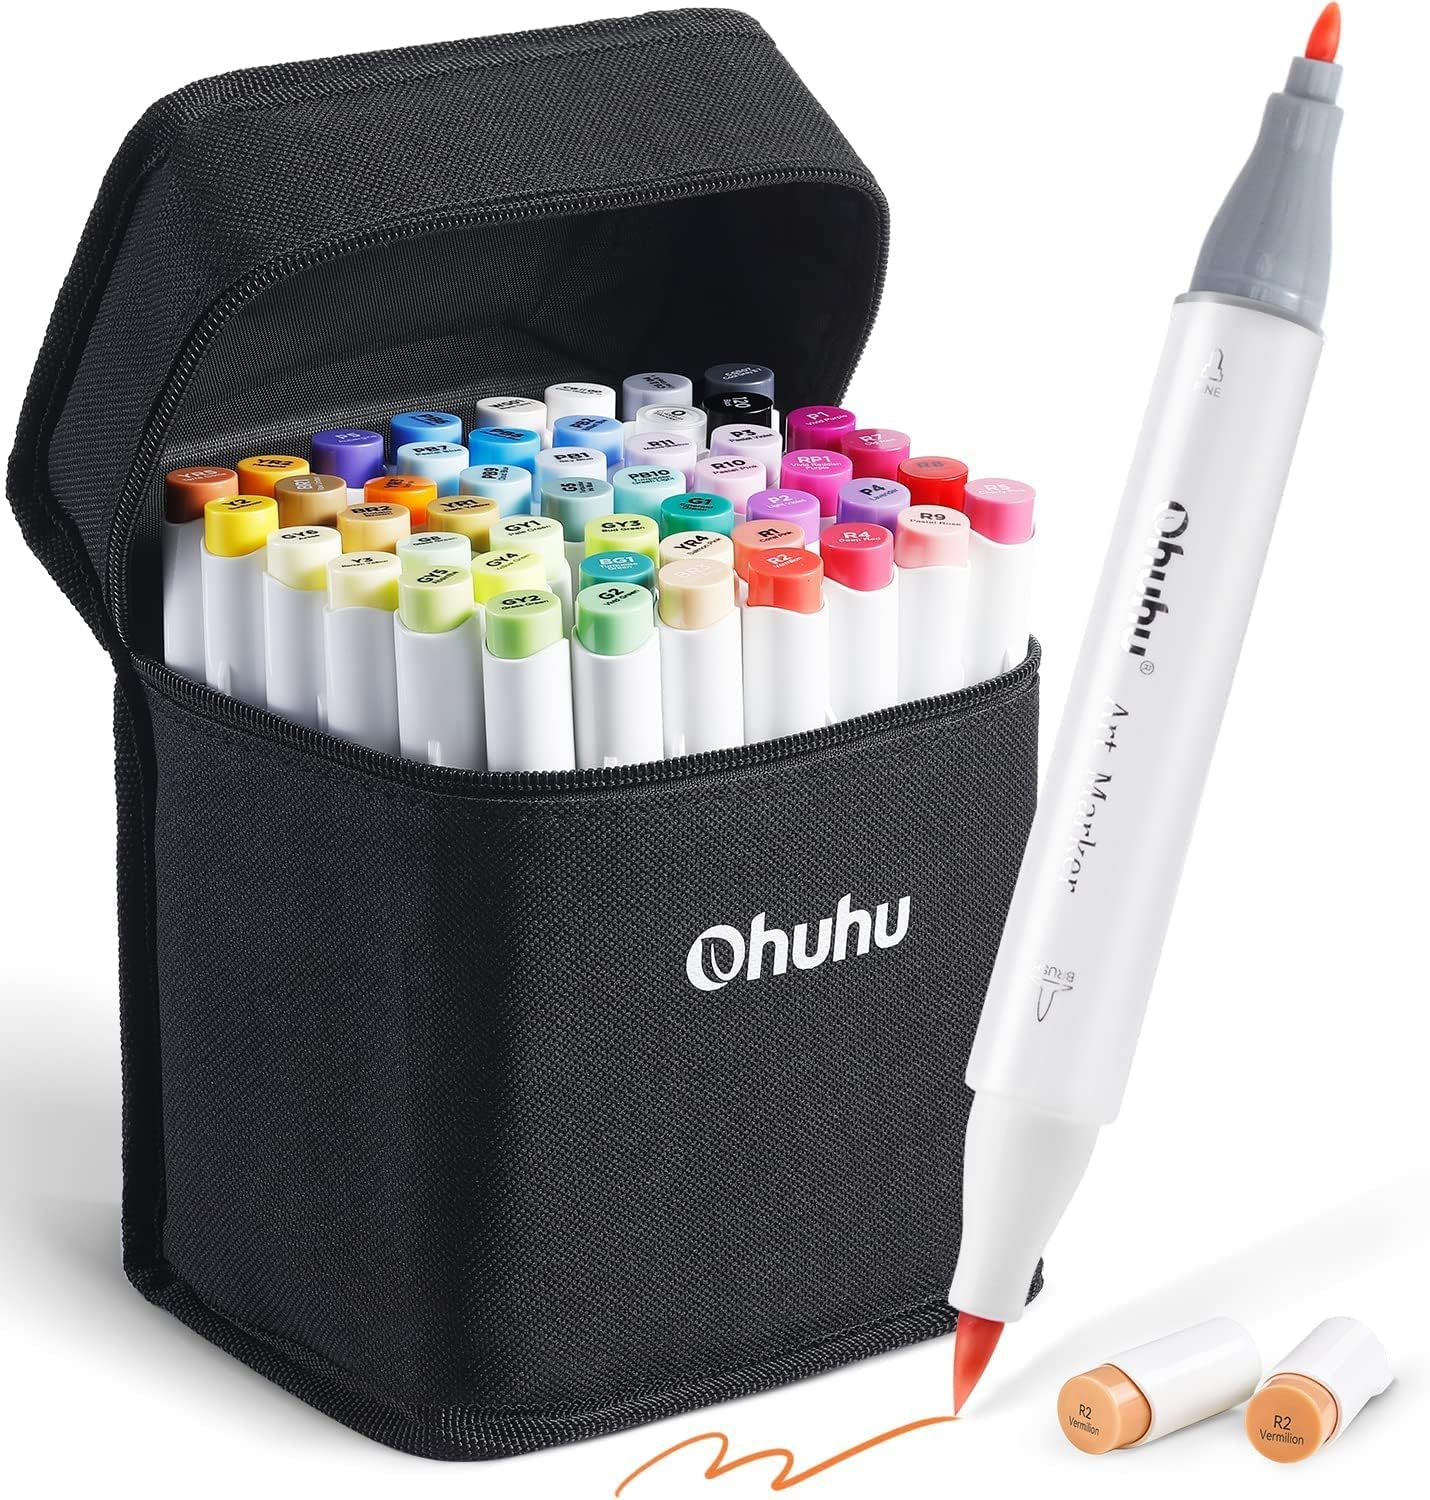 Dual Tip Brush Markers Art Pen Set, Artist Fine and Brush Tip